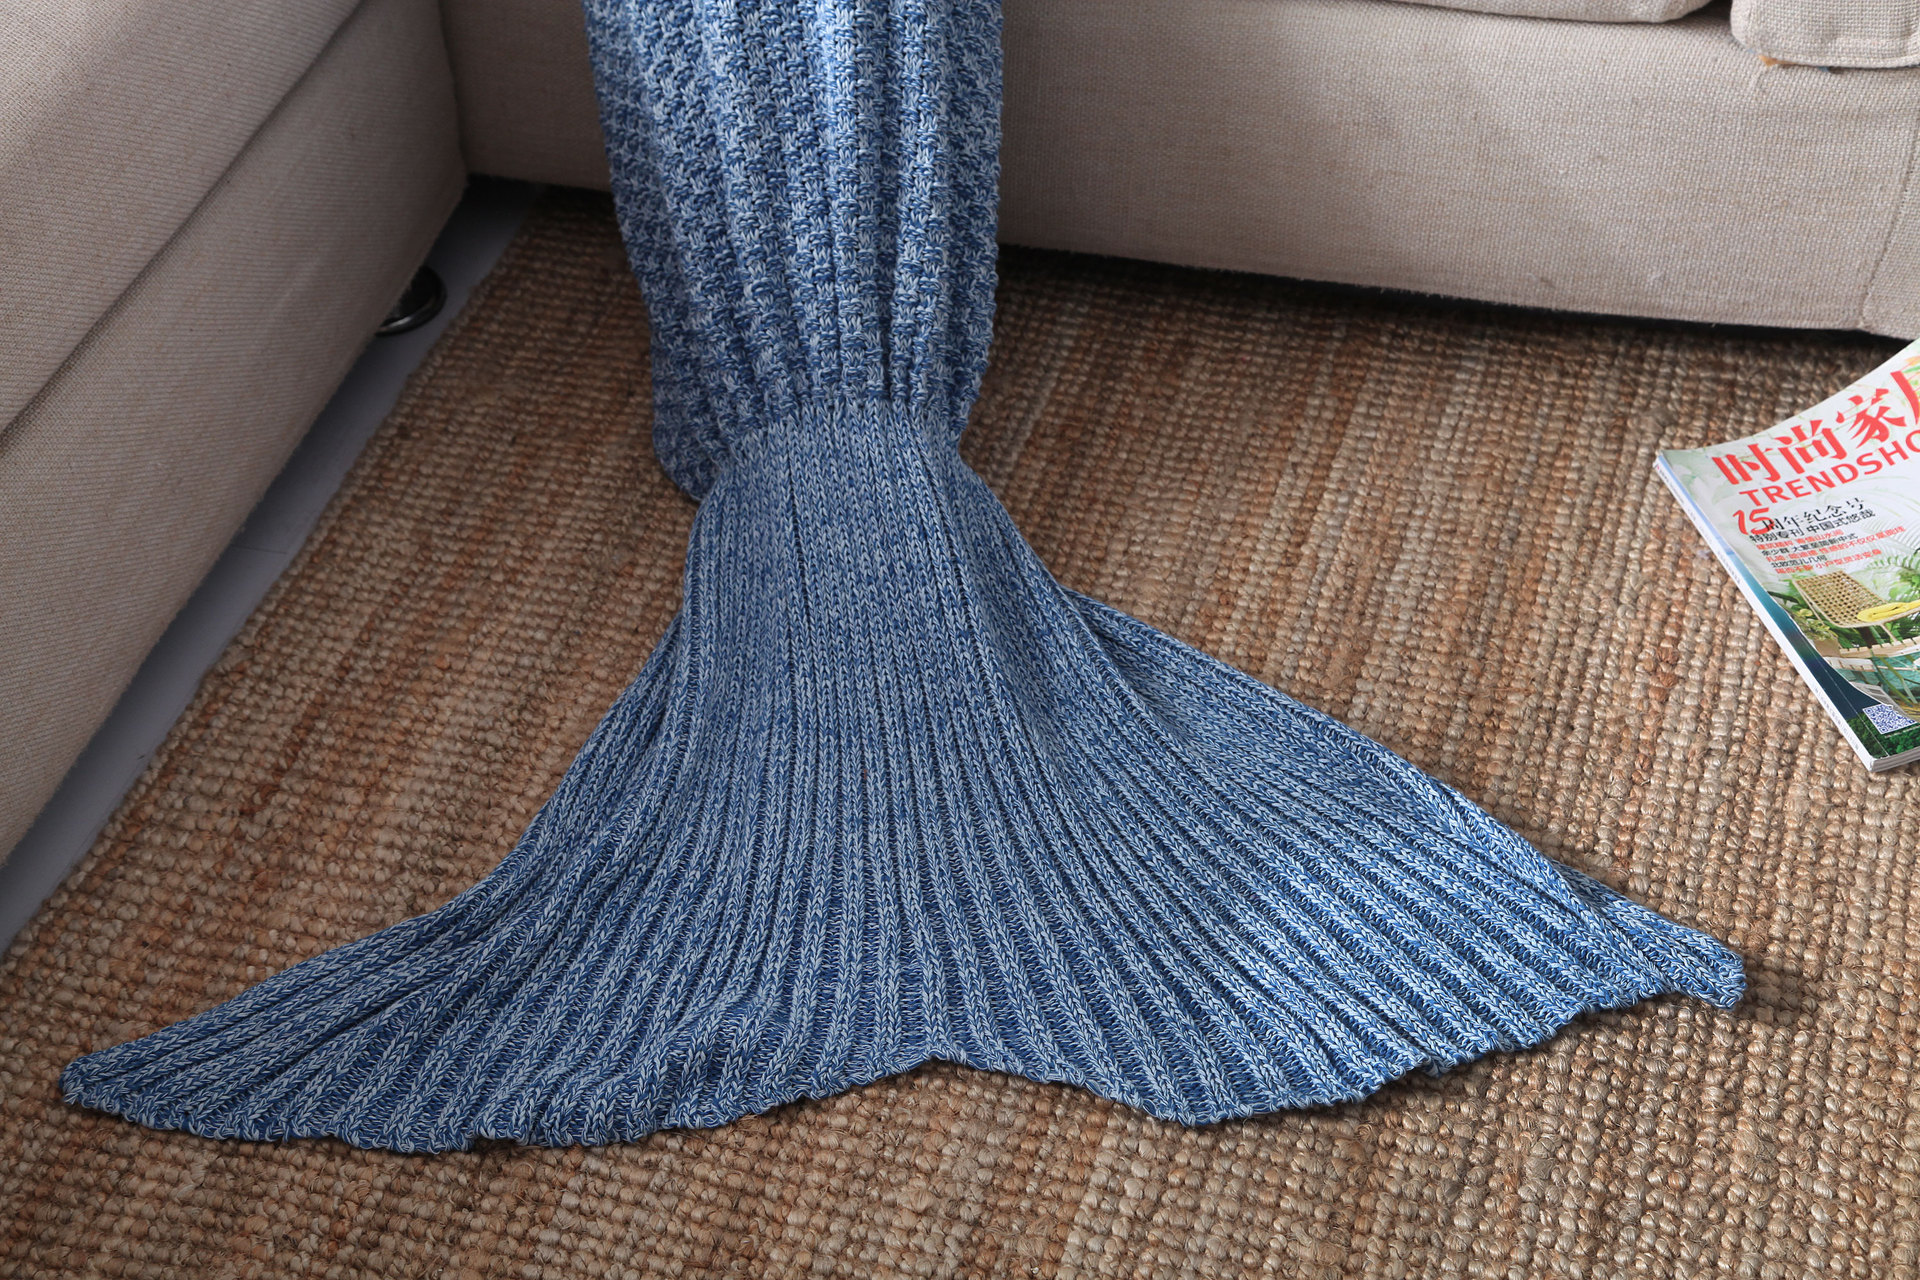 Yarn-Knitted-Mermaid-Tail-Blanket-Handmade-Crochet-Throw-Super-Soft-Sofa-Bed-Mat-Sleeping-Bag-1083119-8